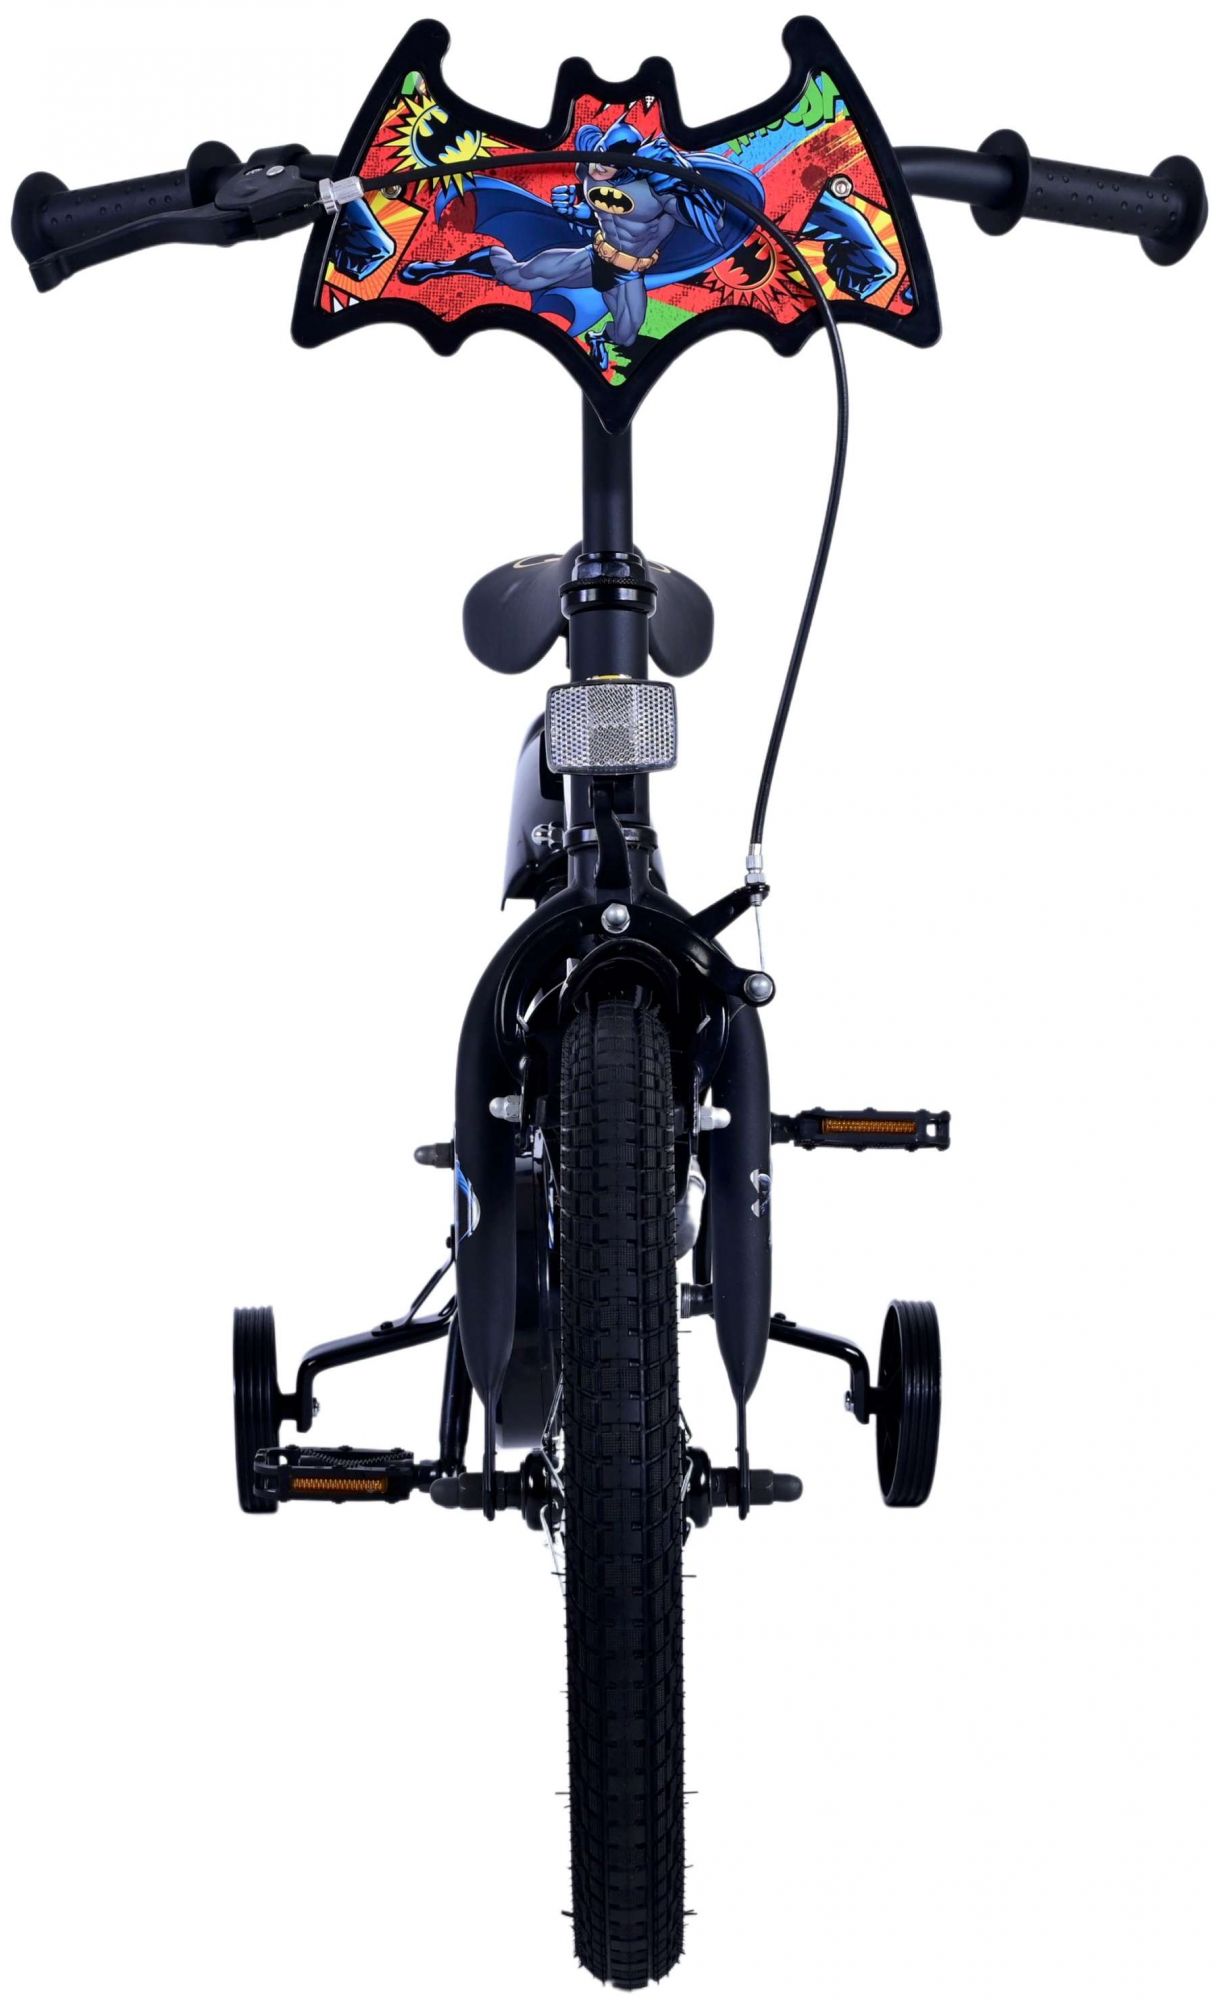 Kinderfahrrad Batman Fahrrad für Jungen 16 Zoll Kinderrad in Schwarz